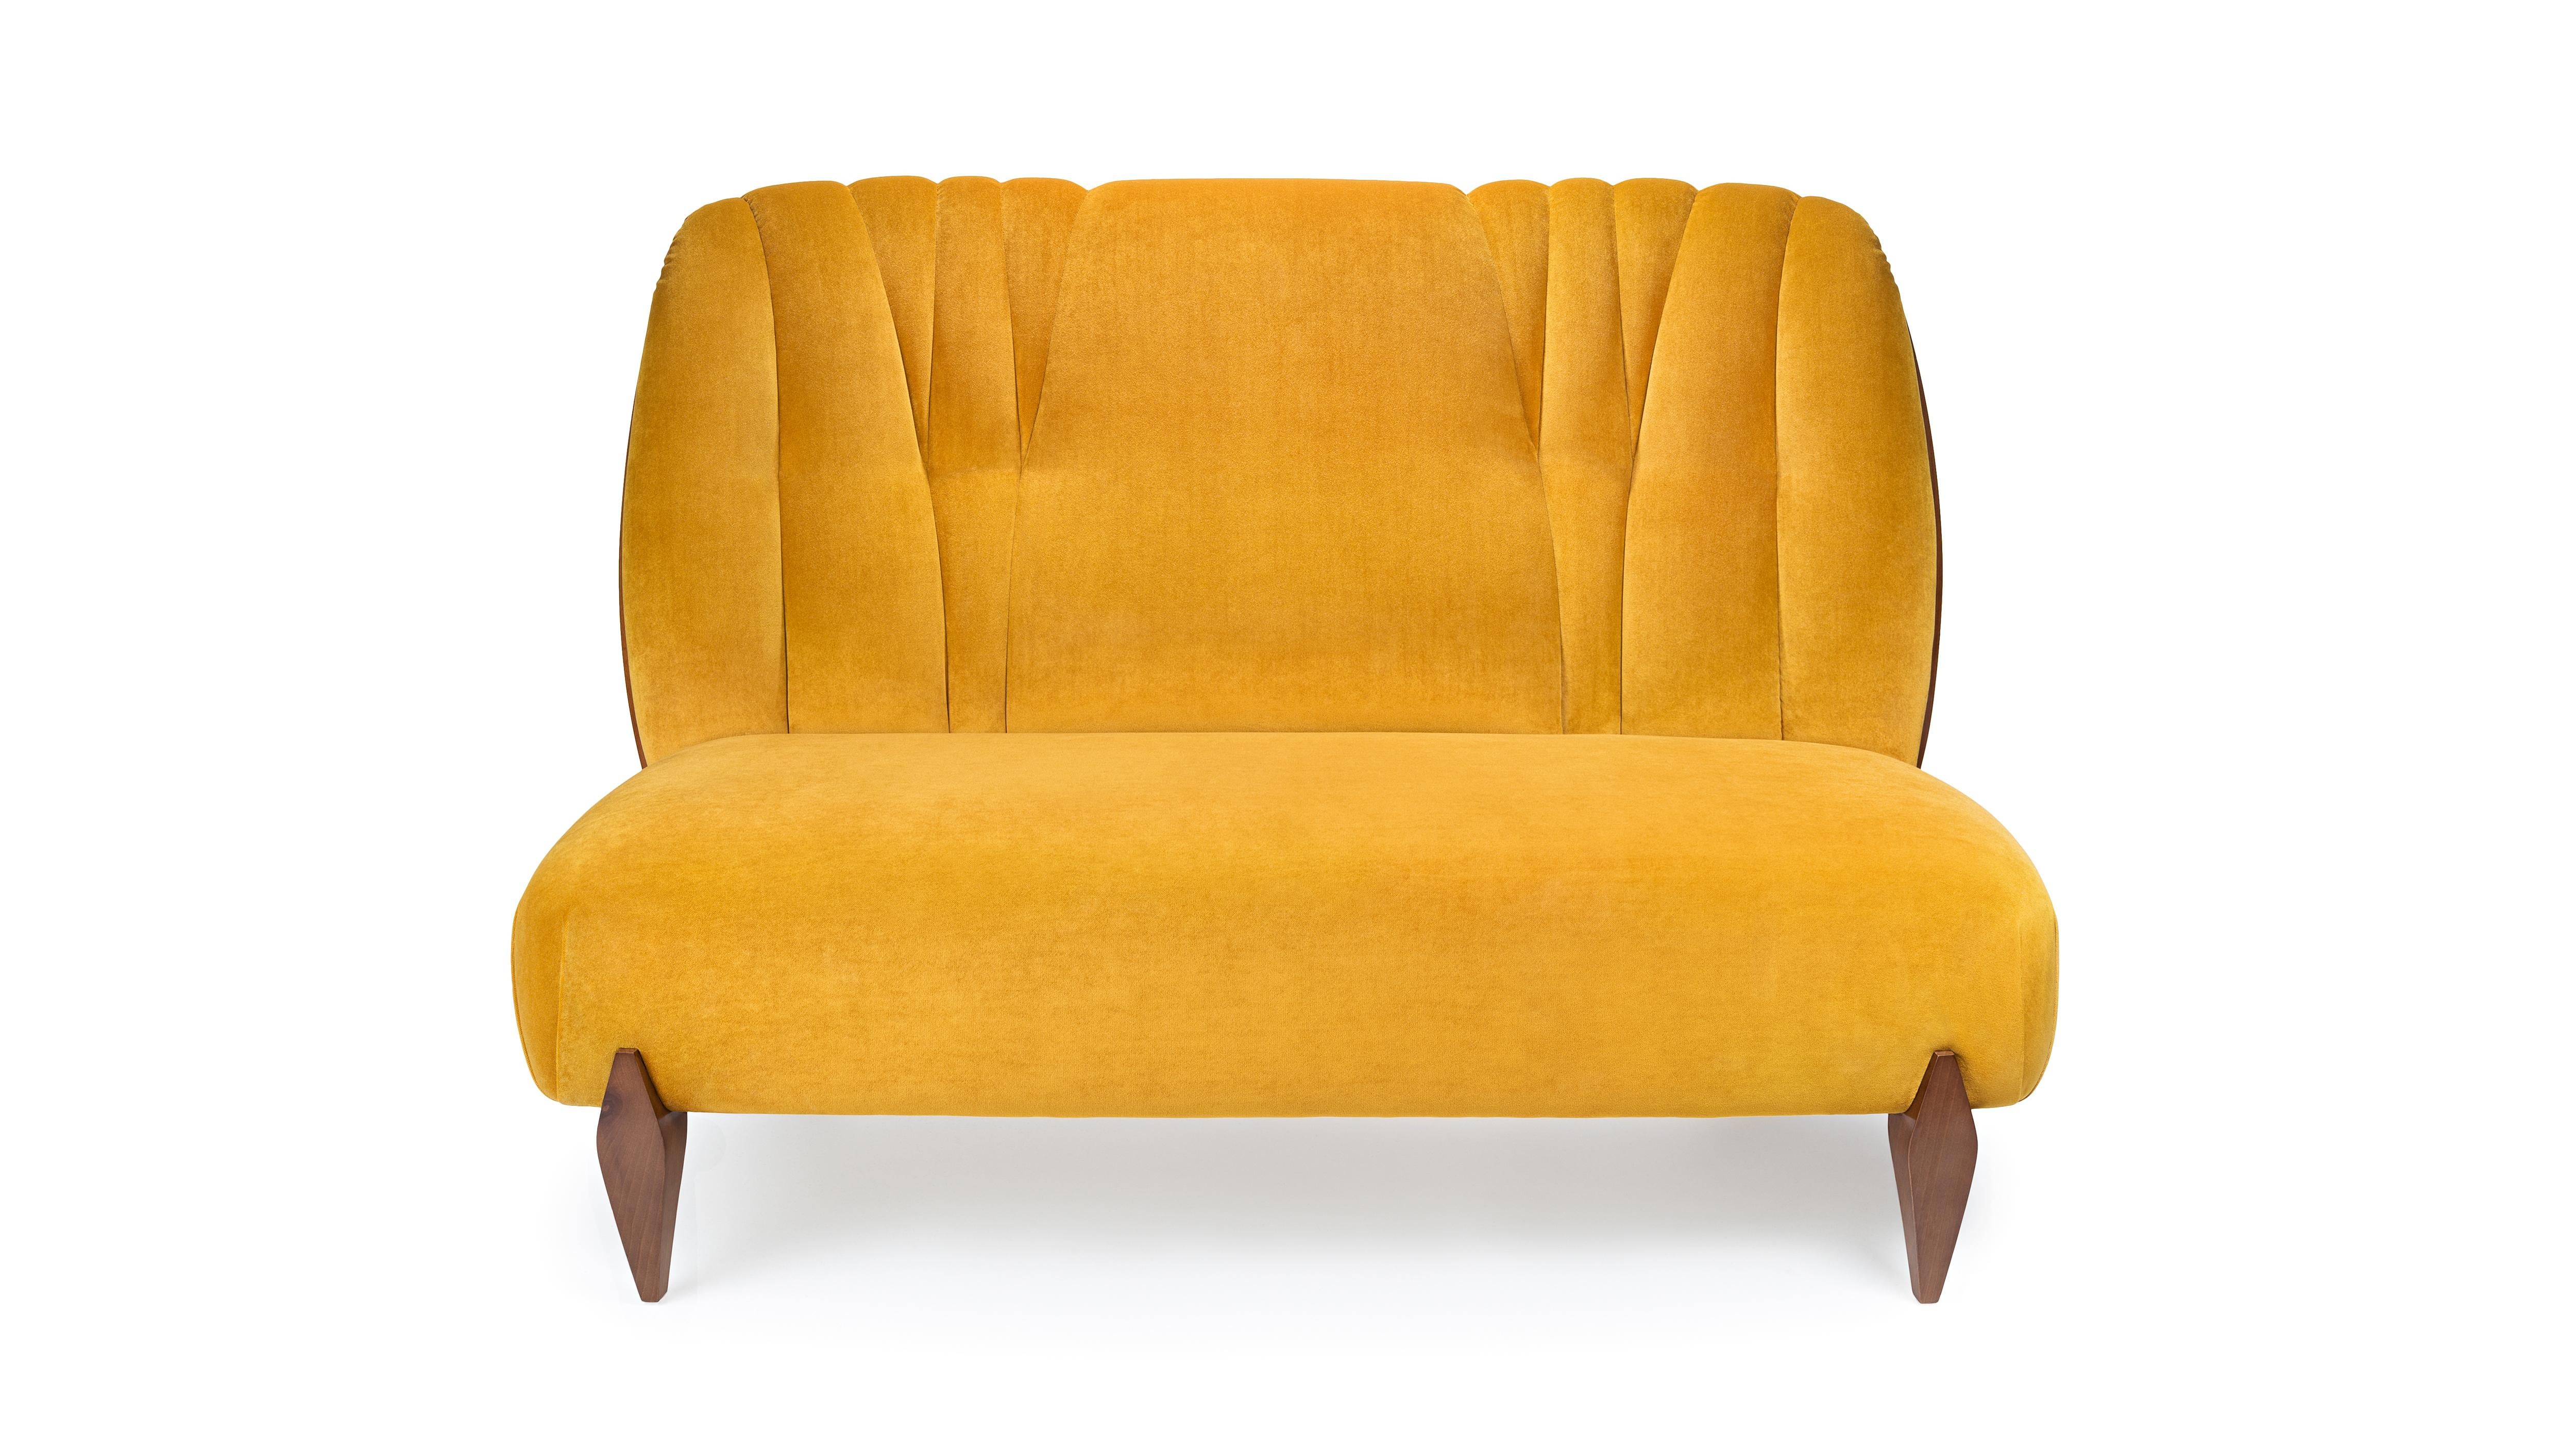 Woodwork Na Pali Two-Seat Sofa, Walnut & COM, InsidherLand by Joana Santos Barbosa For Sale